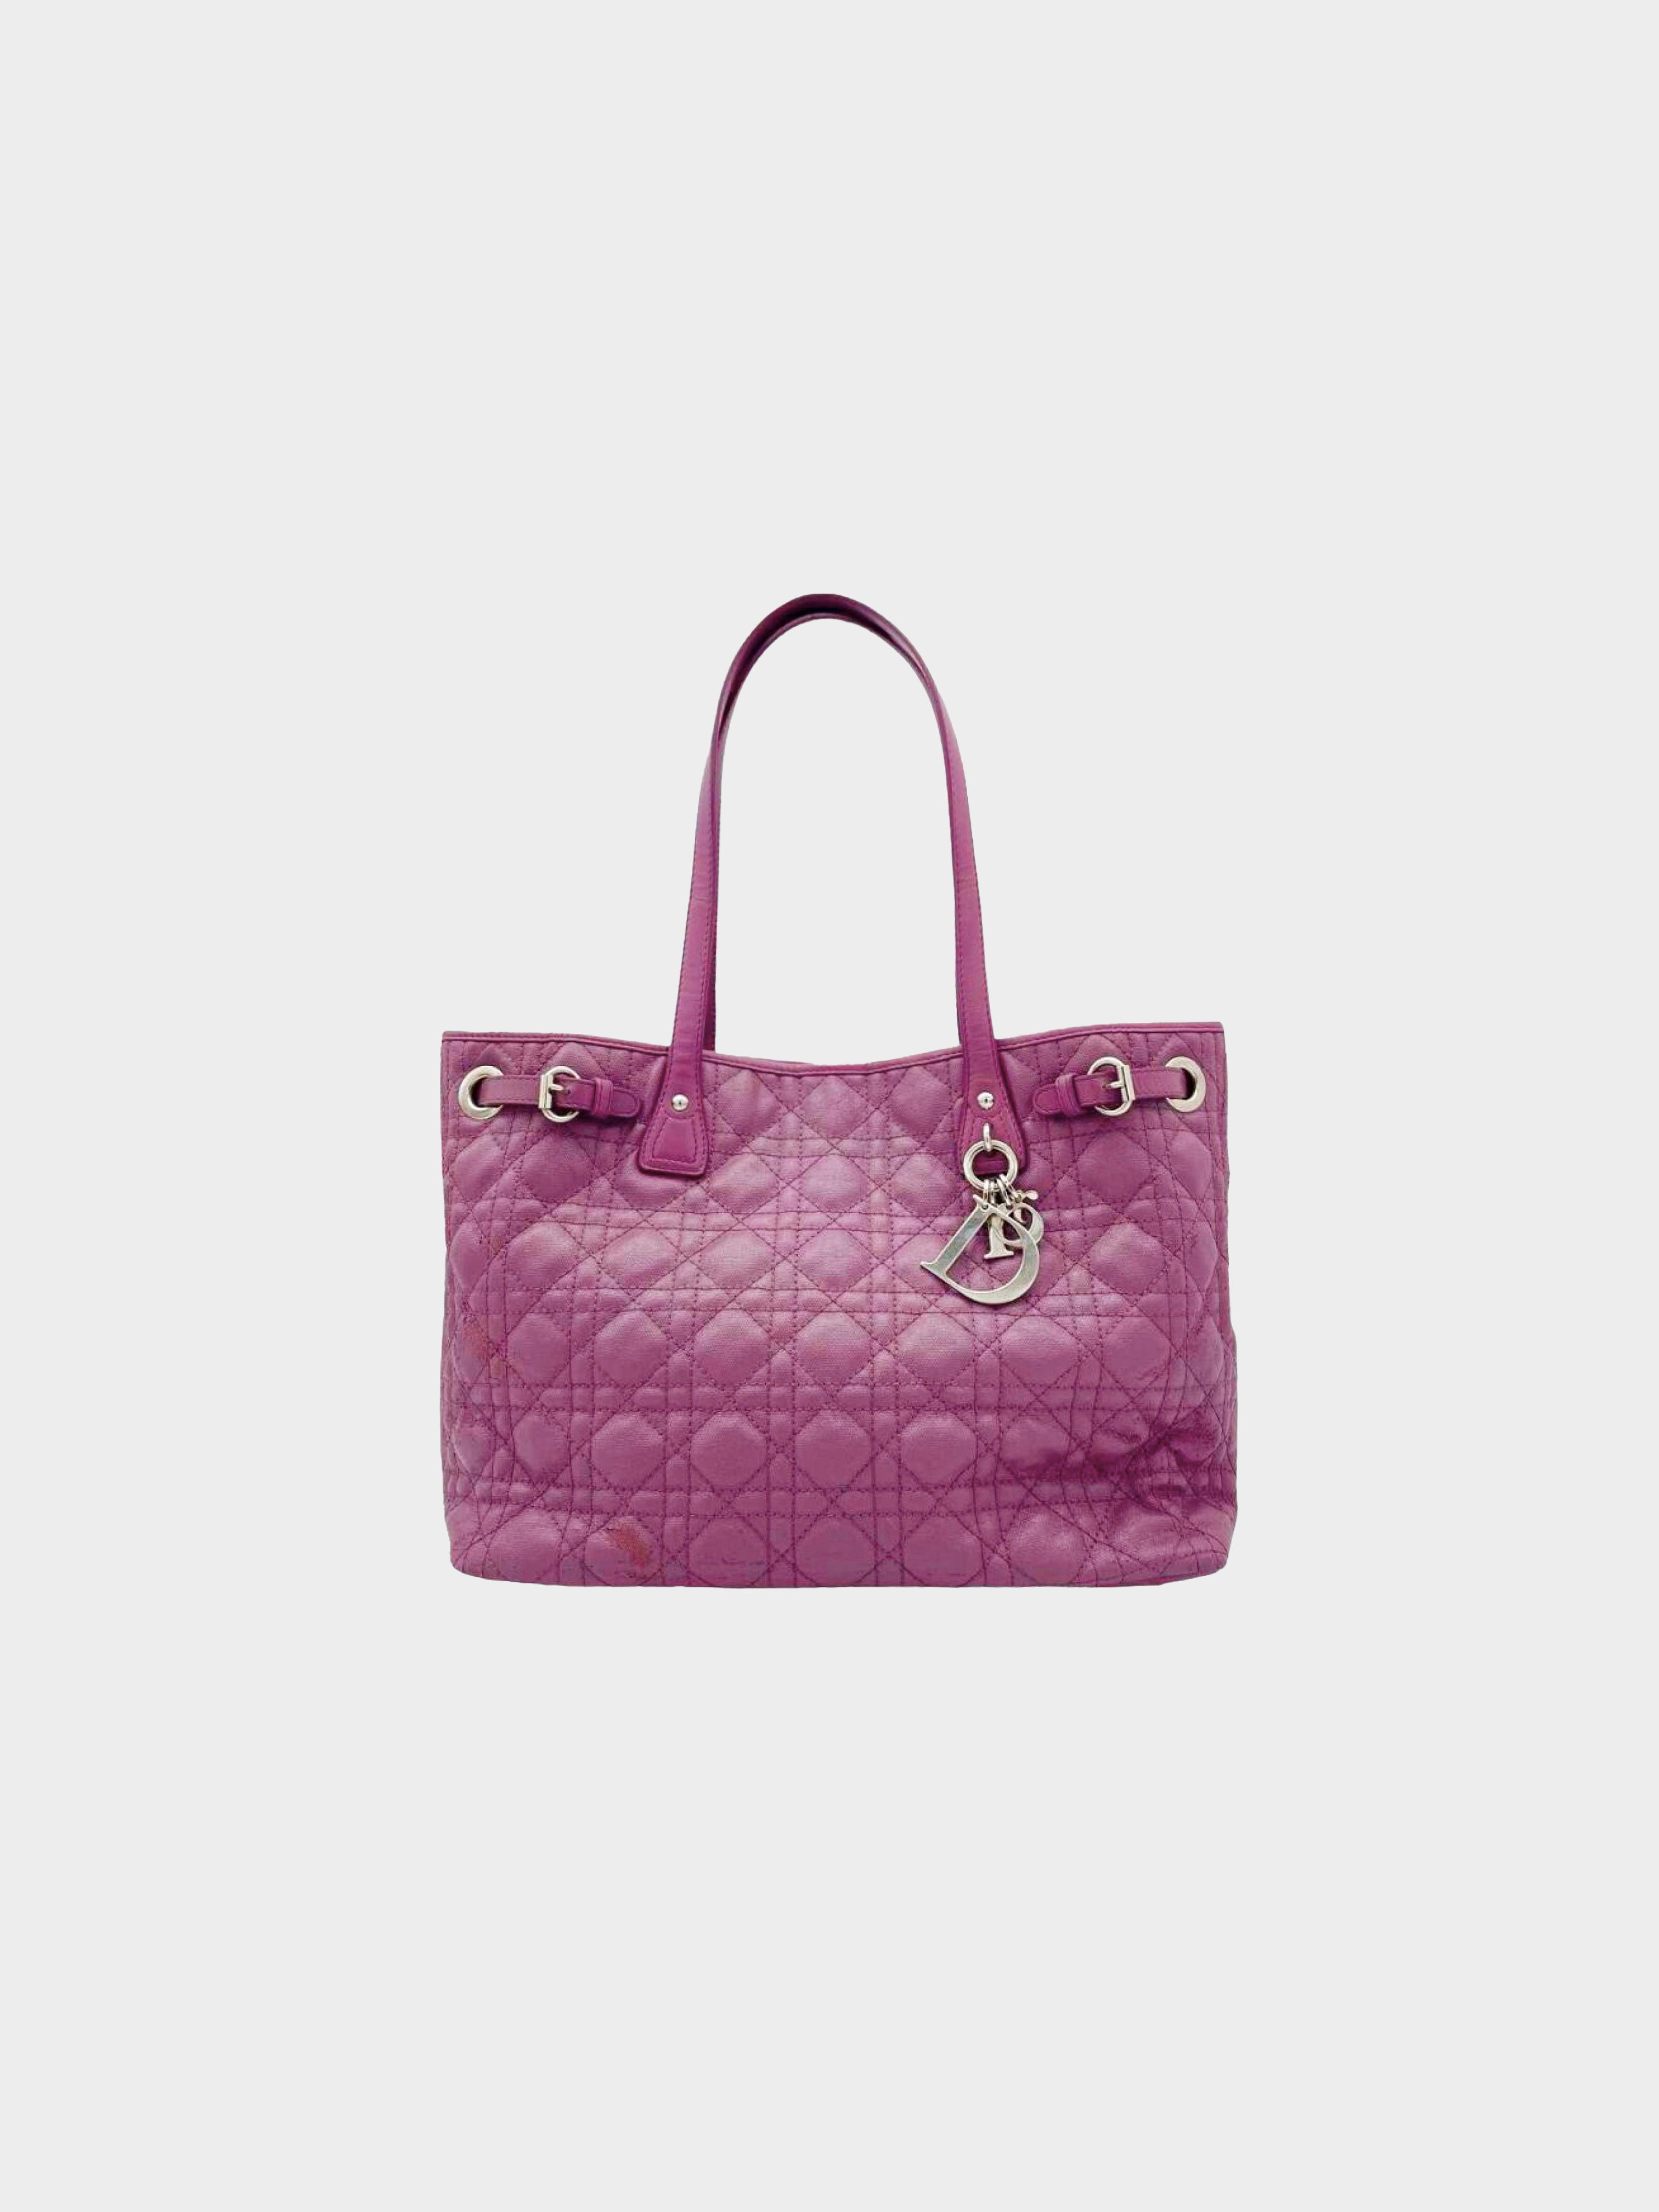 Christian Dior 2011 Purple Panarea Tote Shoulder Bag